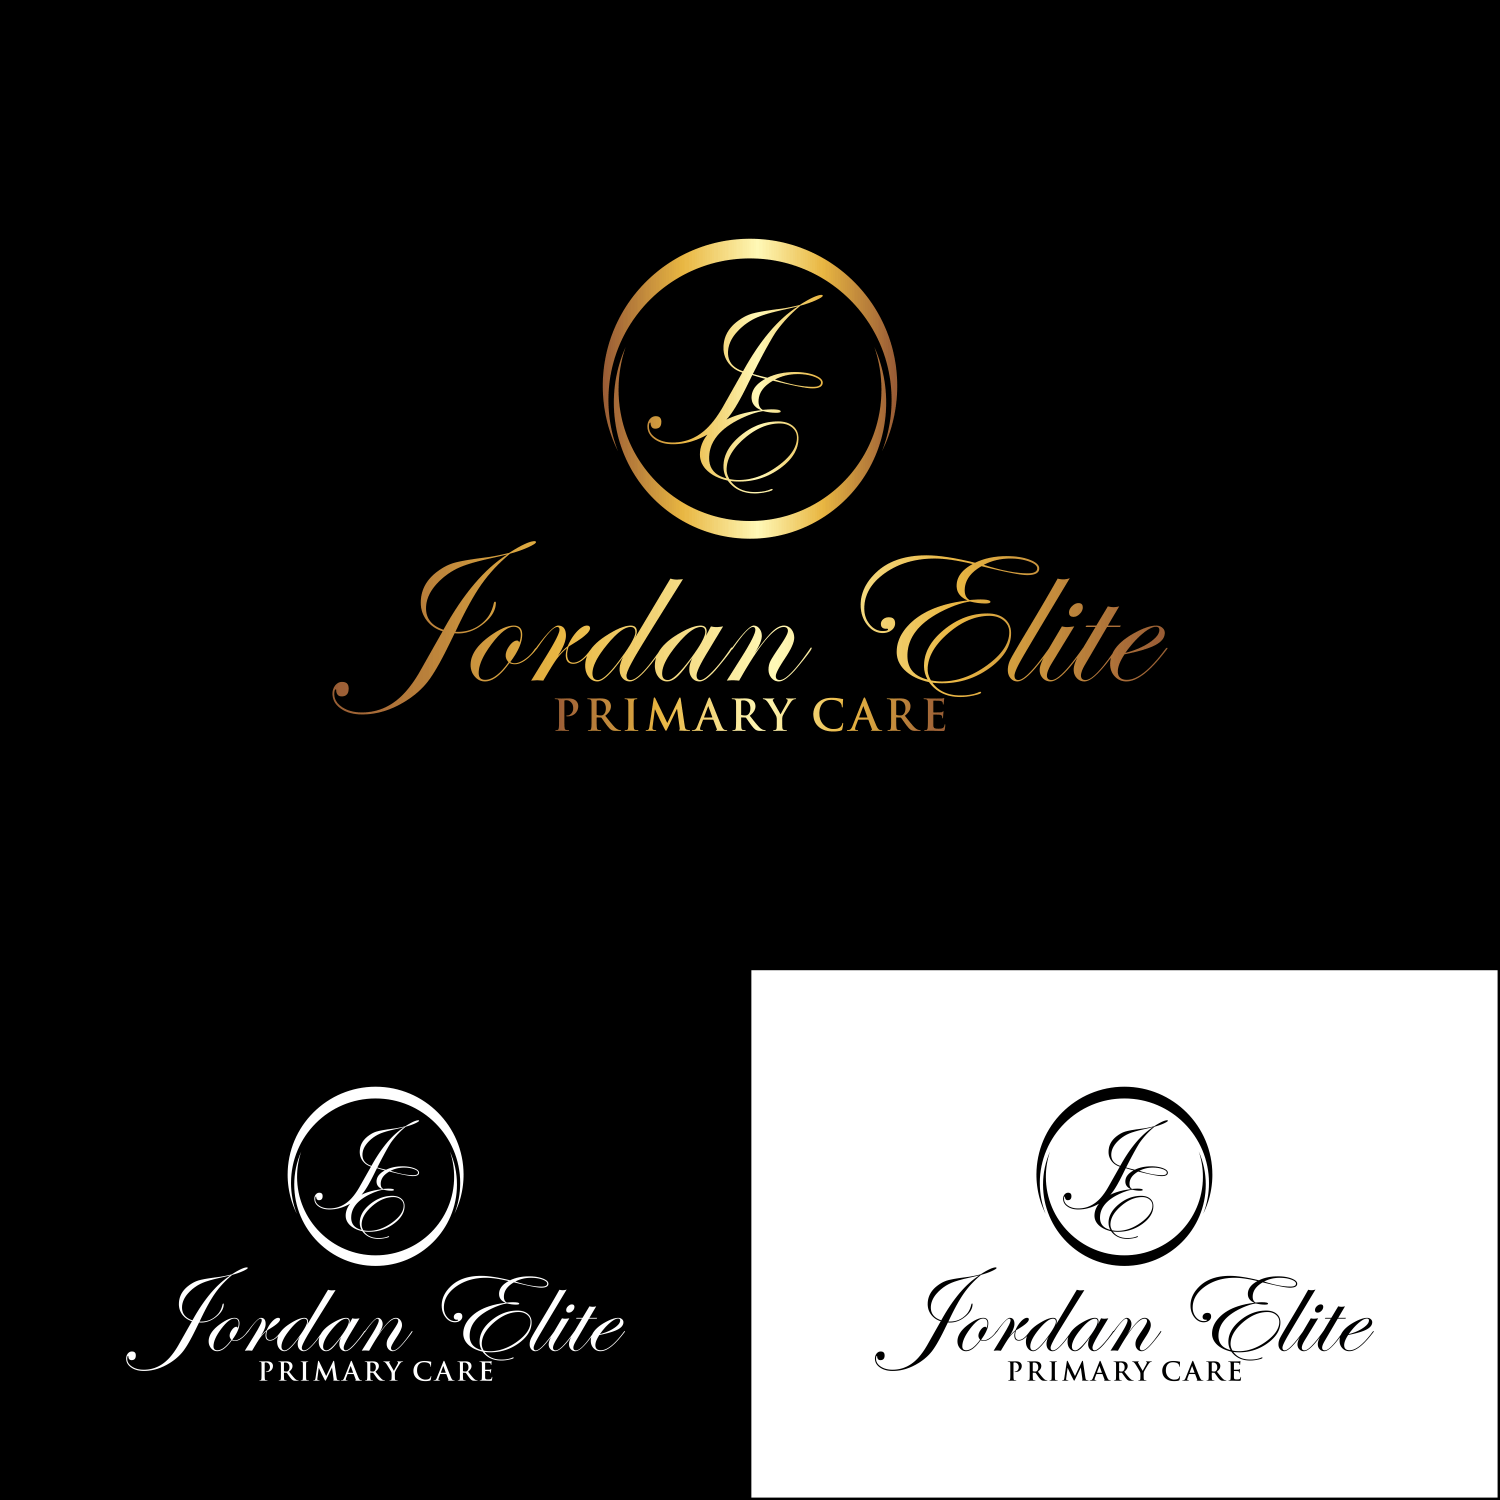 Jordan Elite Logo - Elegant, Traditional, Medical Logo Design for Jordan Elite Primary ...